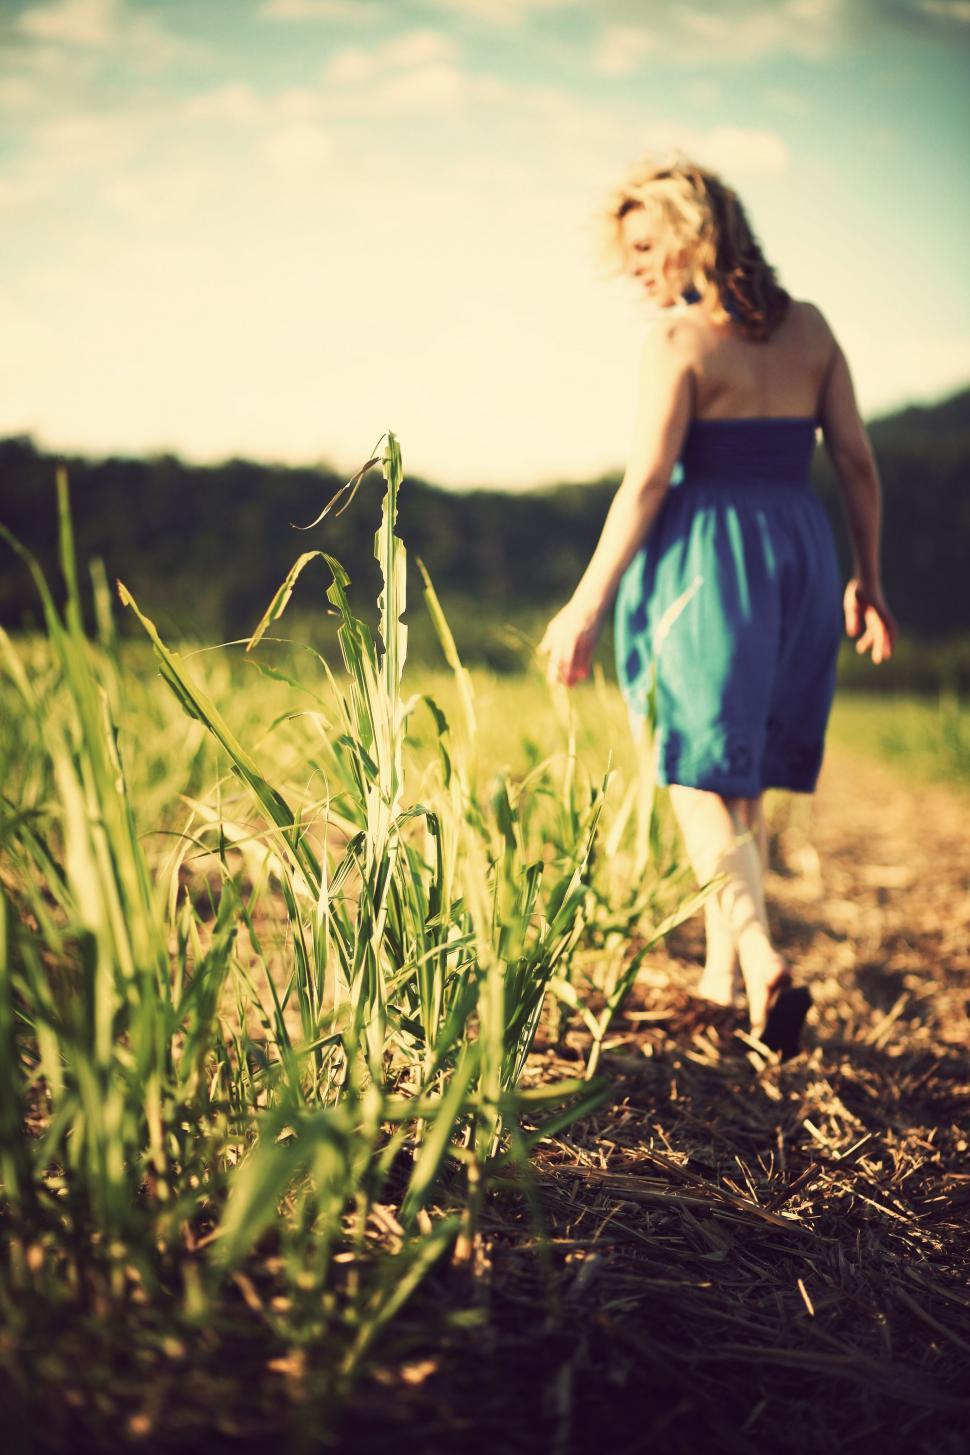 Free Image of Woman in Blue Dress Walking Through Field 